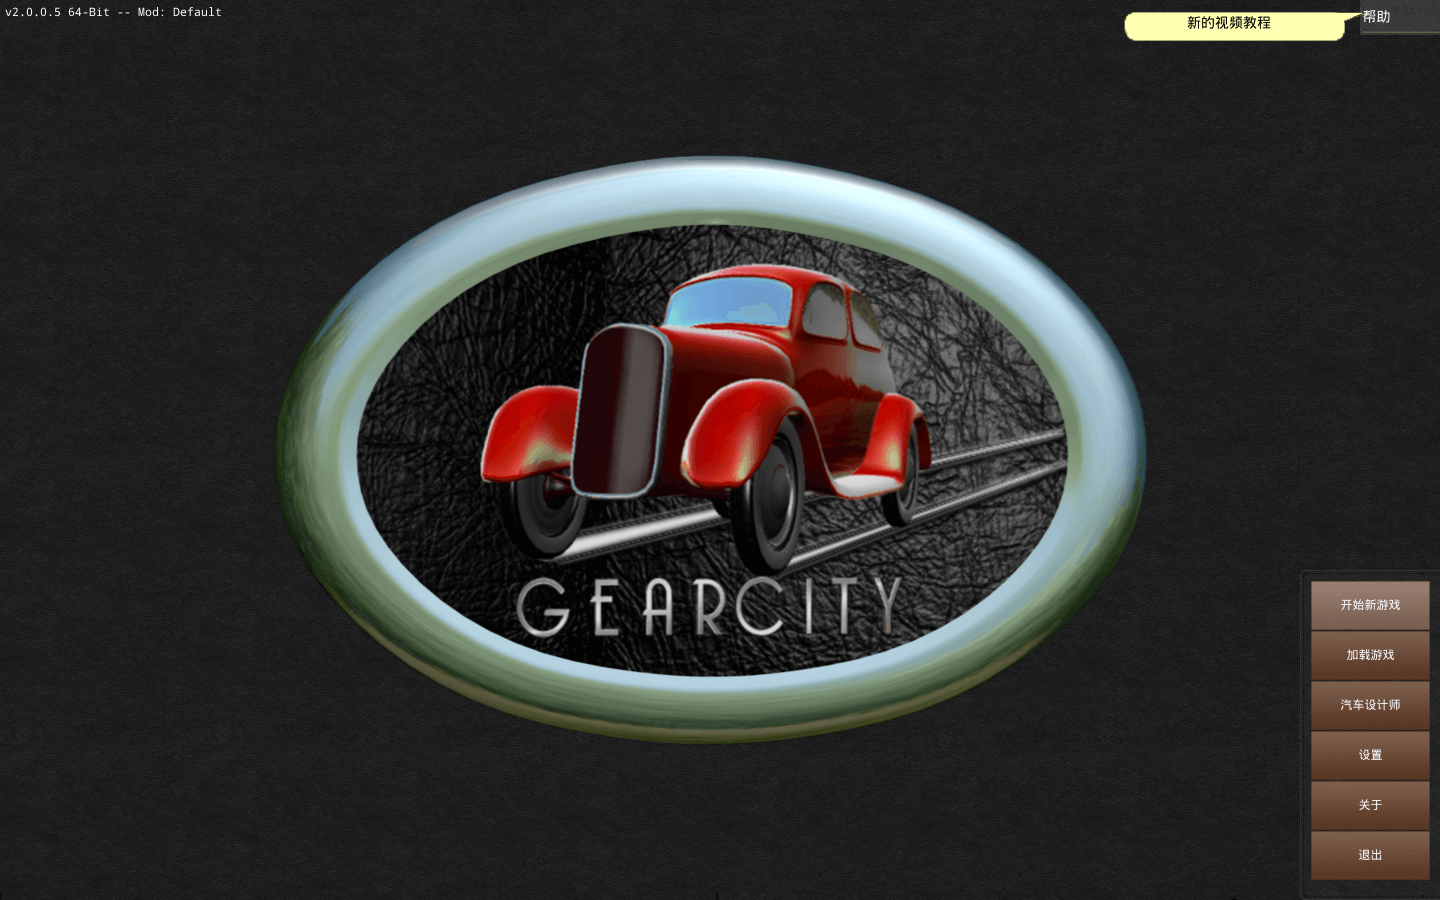 齿轮城市 for Mac GearCity v2.0.0.11 HF 中文原生版 苹果电脑